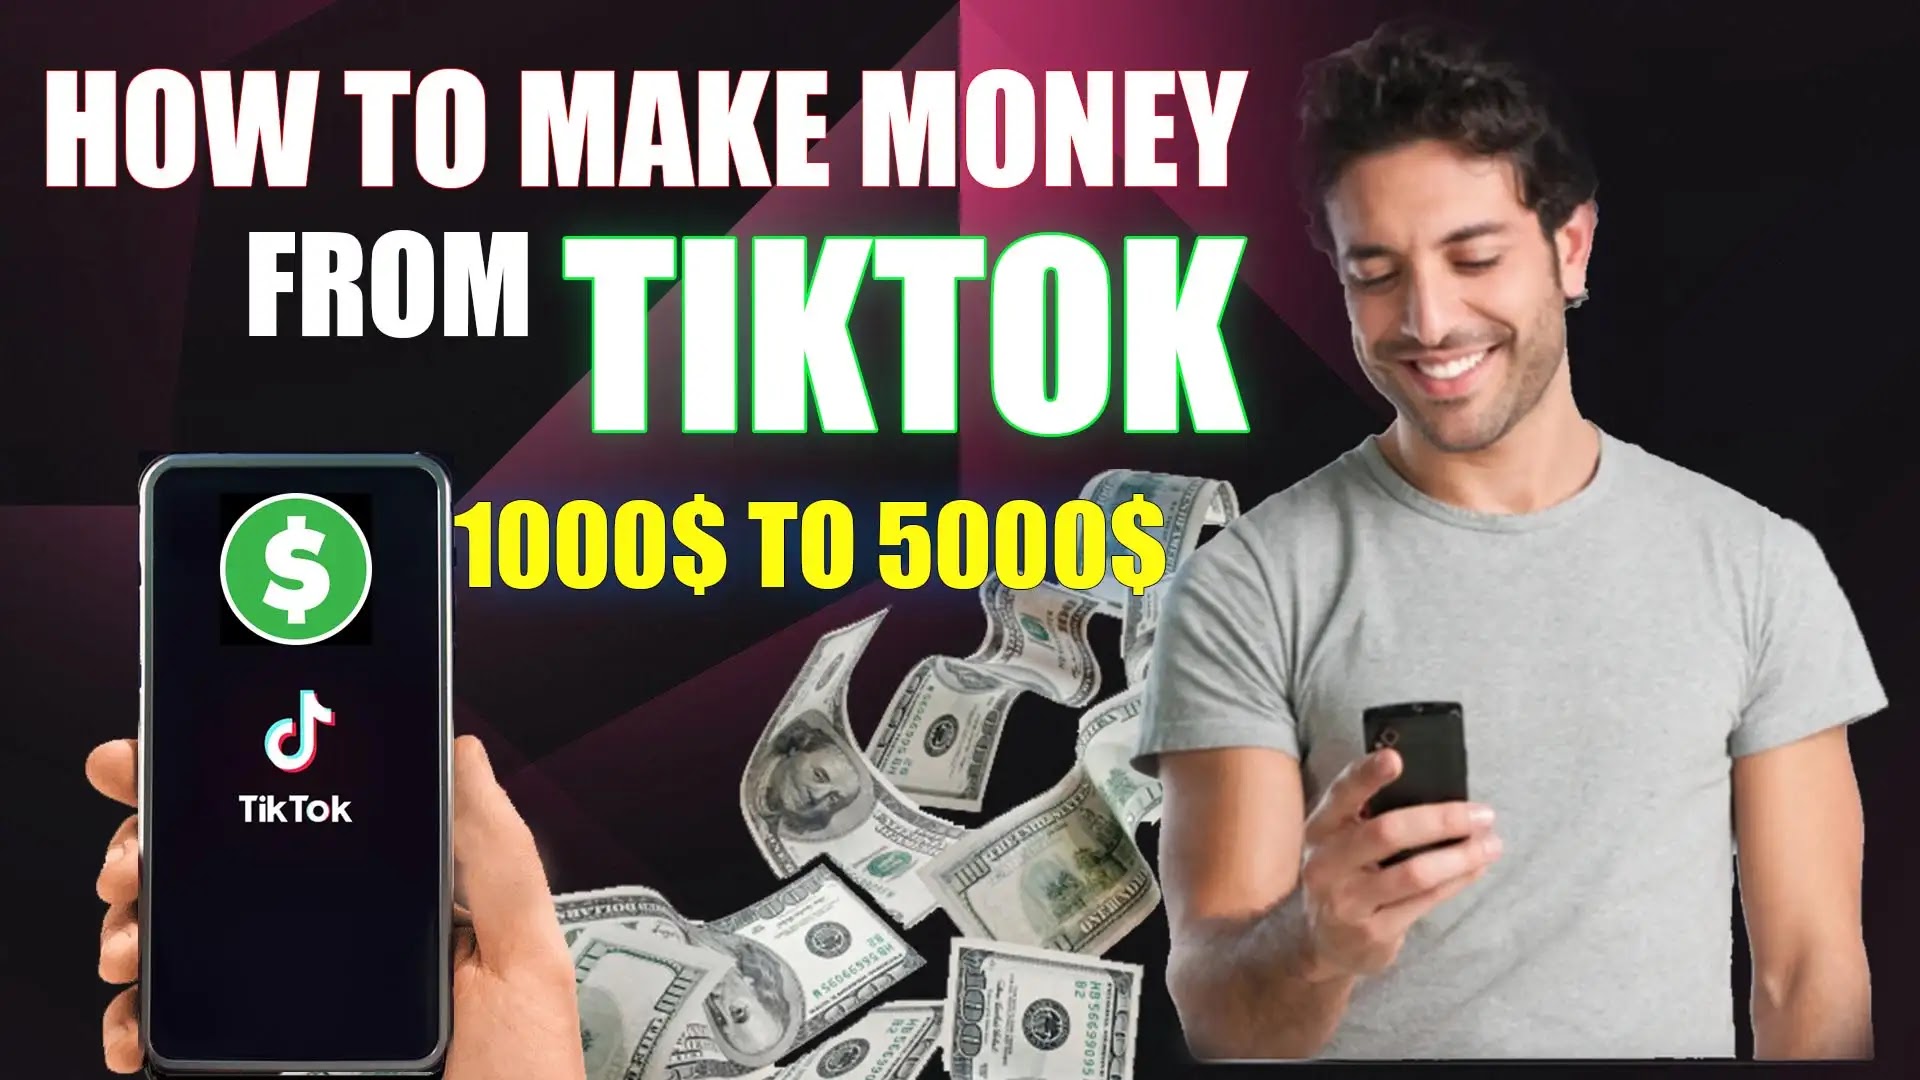 How to make money from Tiktok - Make Money Online